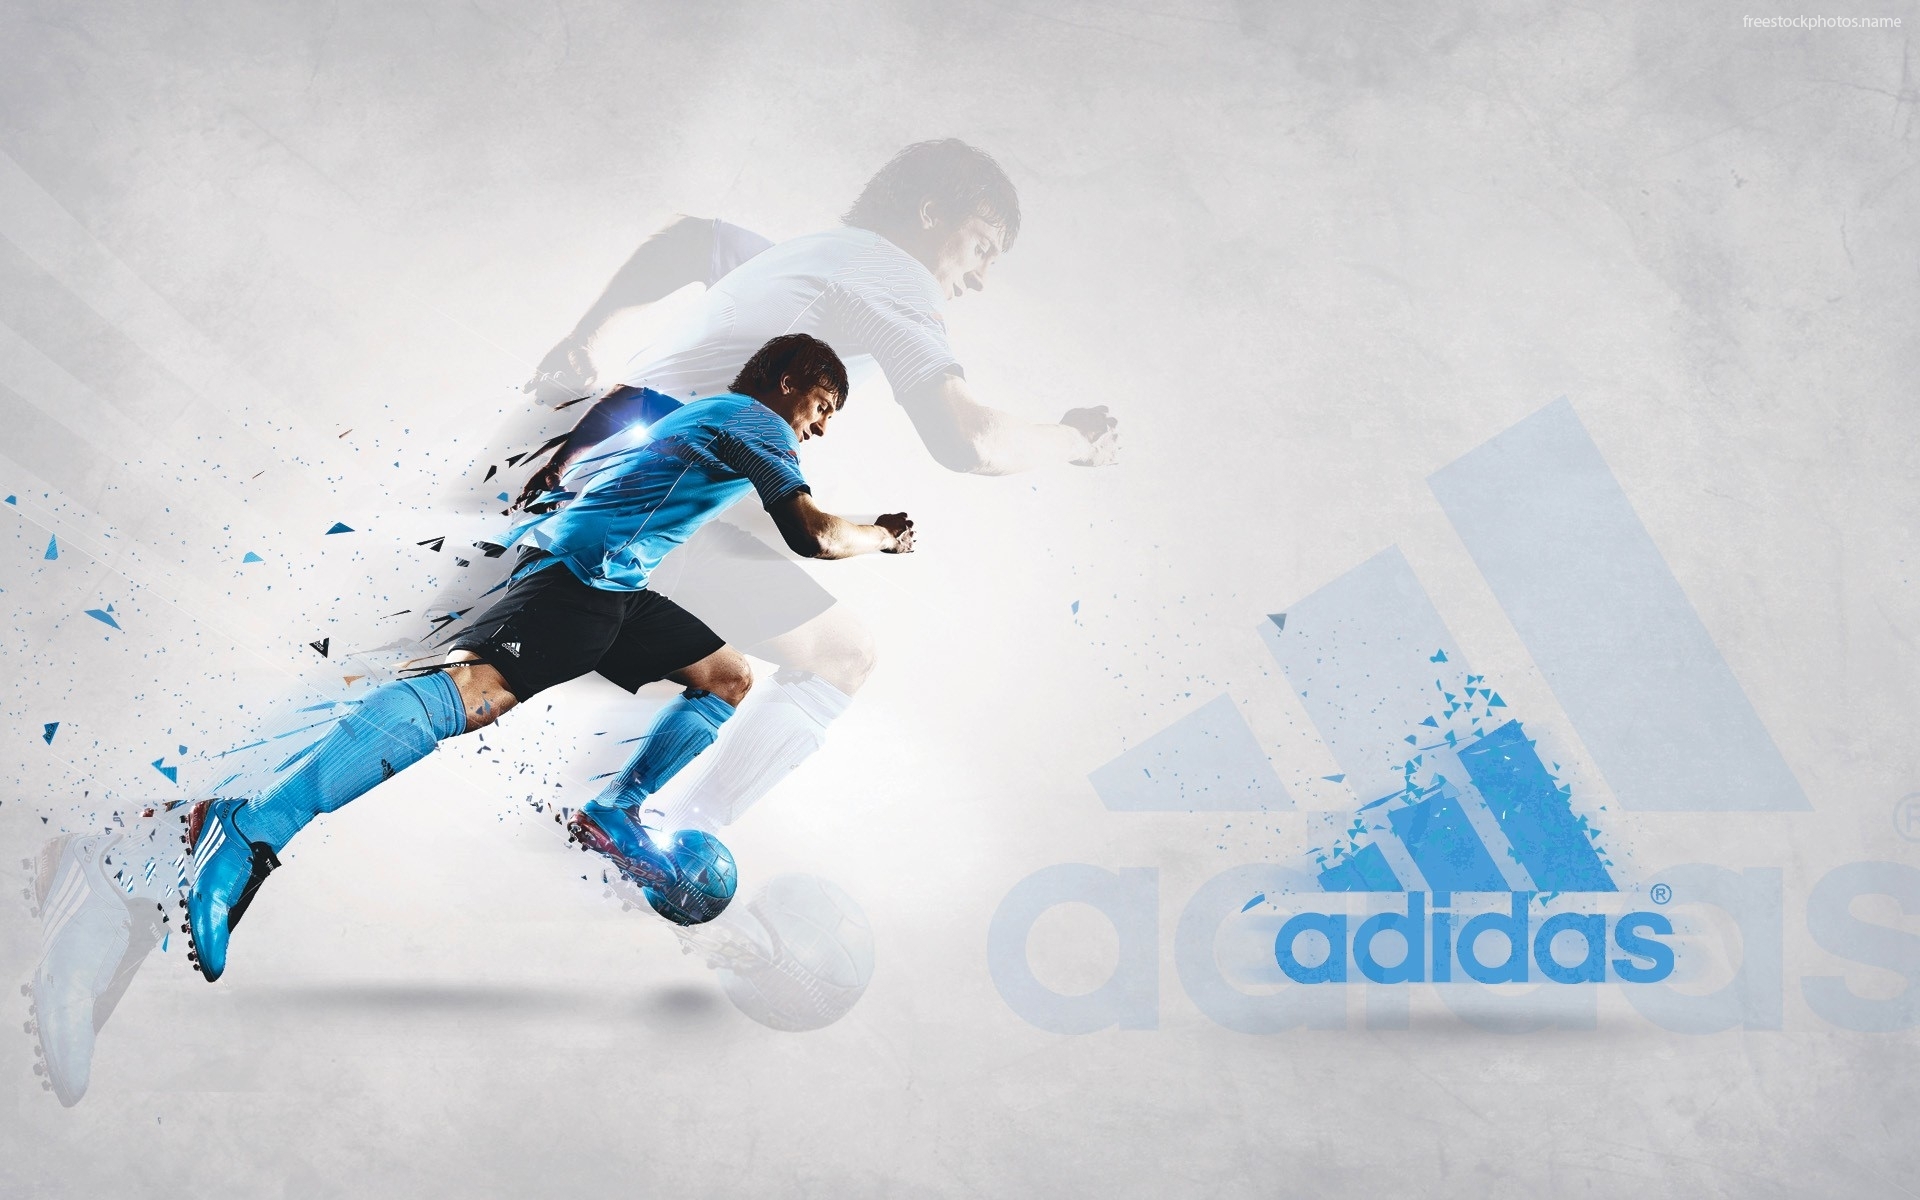 Stock Photos Of Adidas Soccer Player